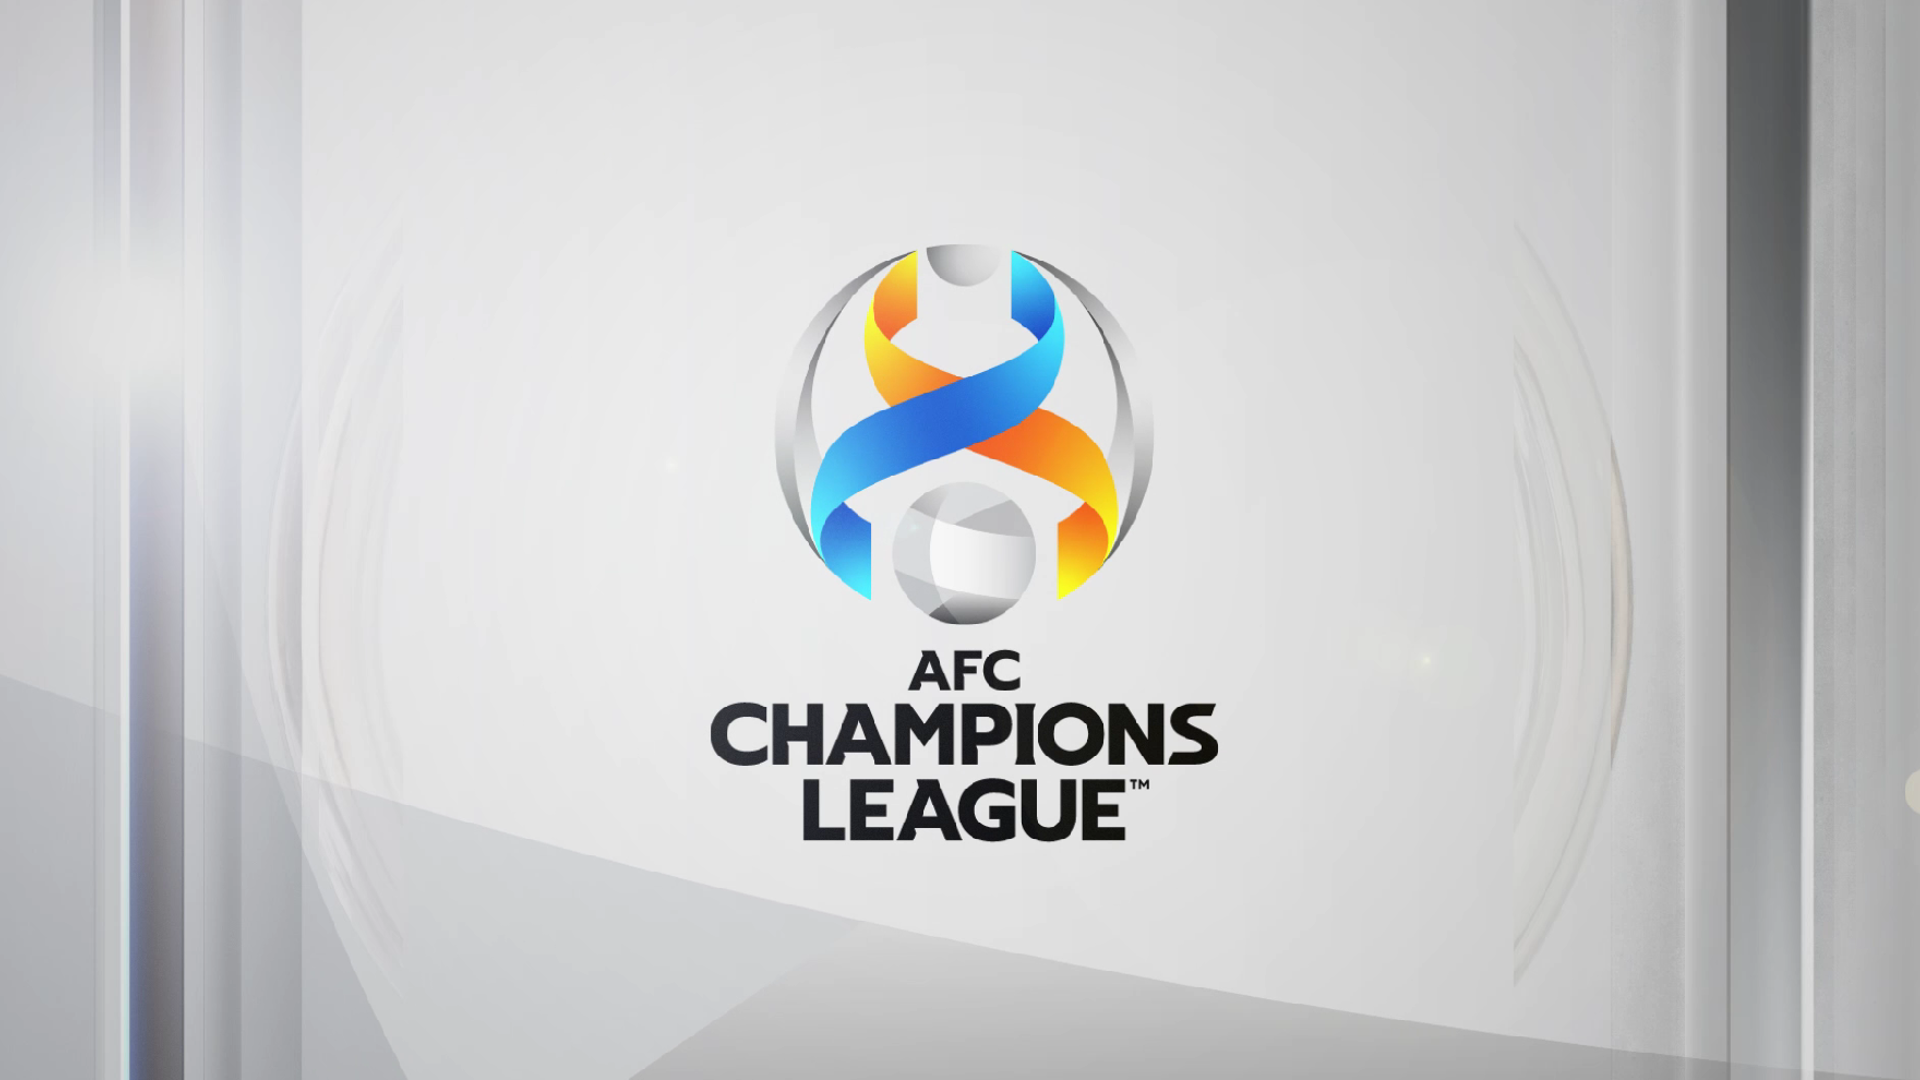 Preview - Group C: Sepahan FC (IRN) v AGMK FC (UZB)